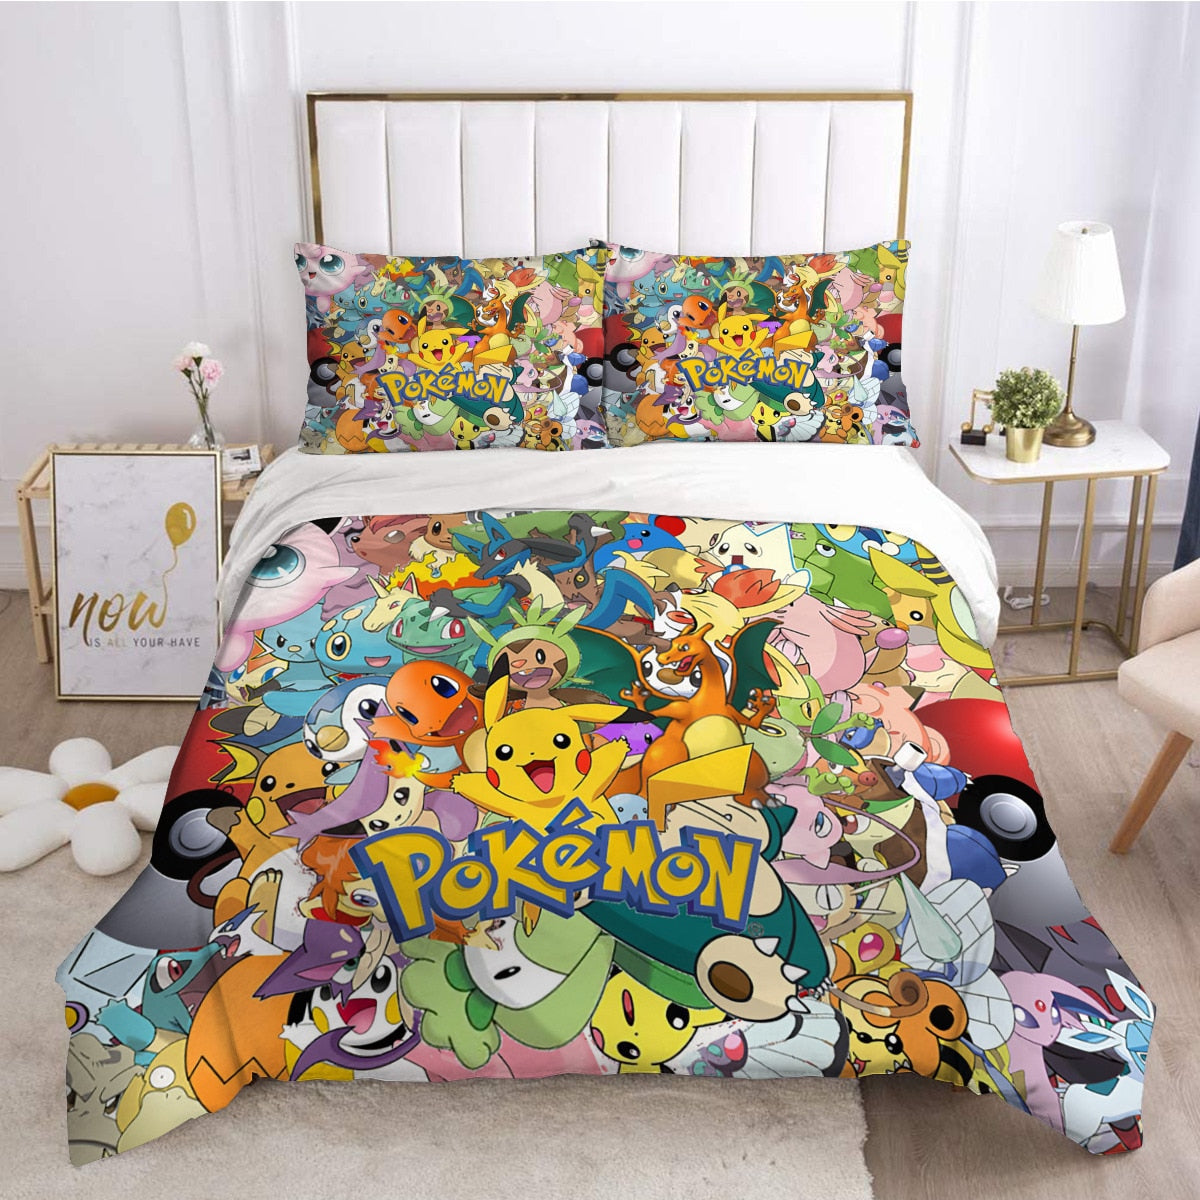 Pokemon Pikachu Quilt Cover Bedding 1